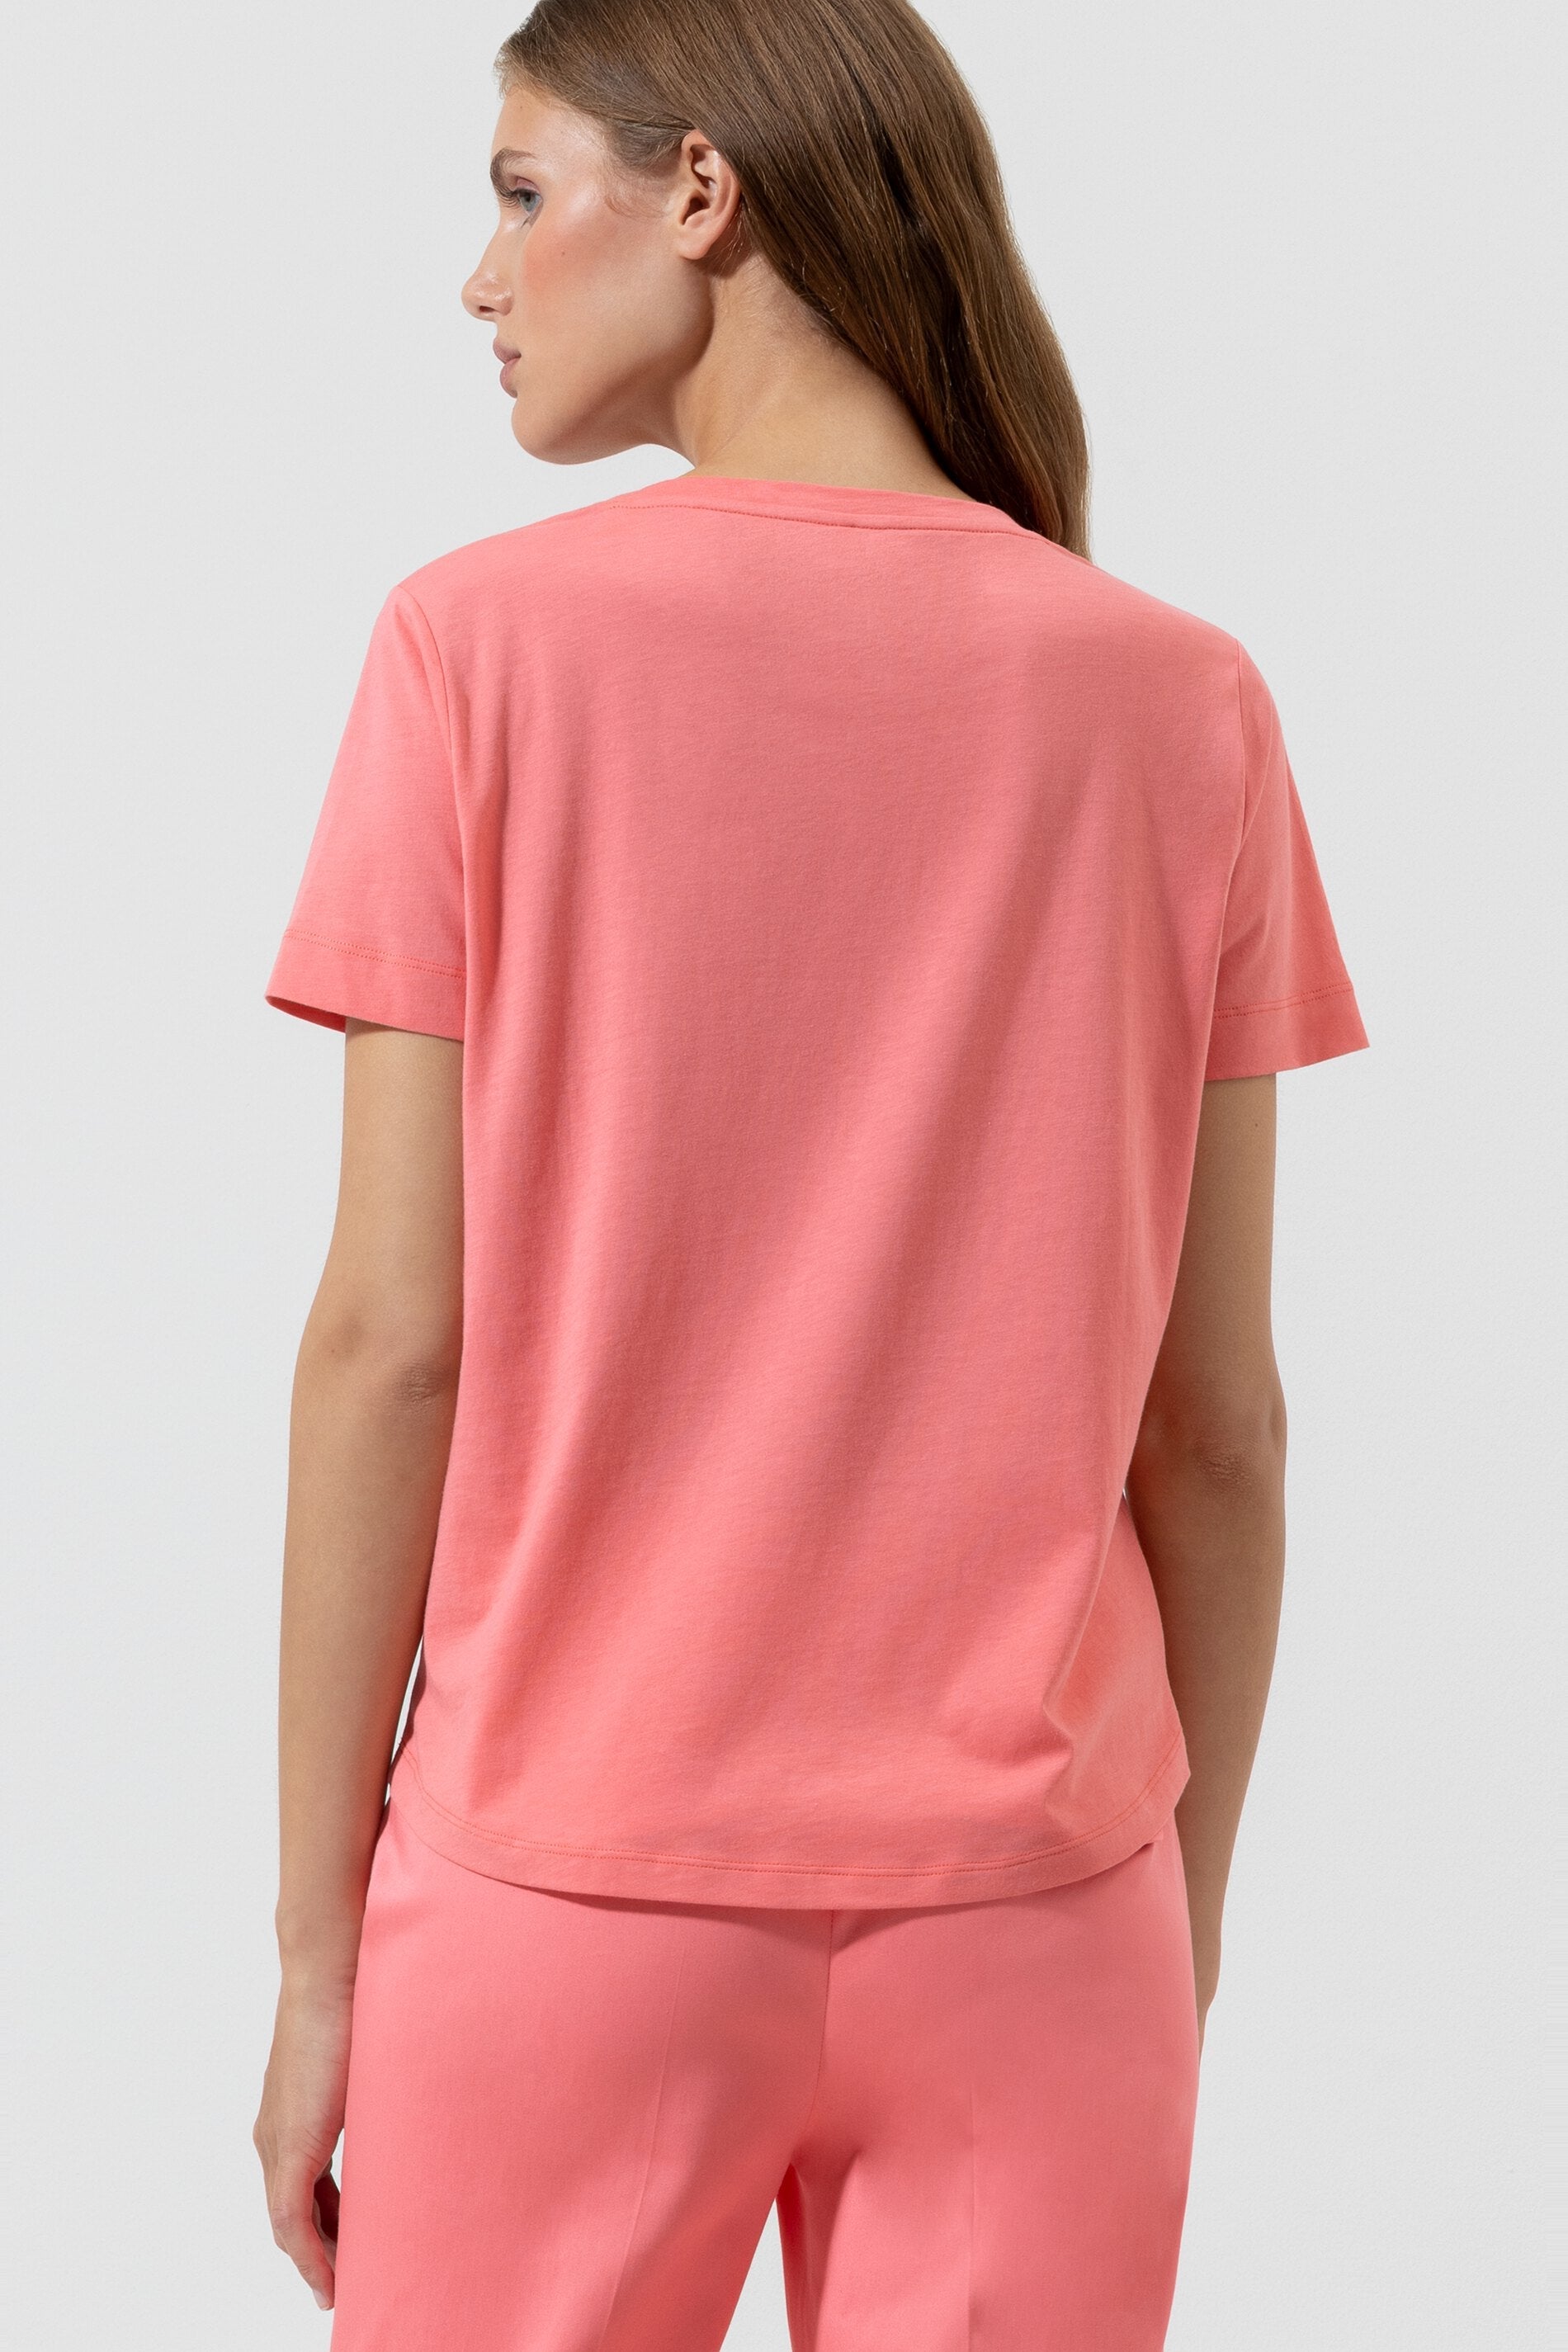 LUISA-CERANO-OUTLET-SALE-T-Shirt-aus-Organic-Cotton-Shirts-ARCHIVE-COLLECTION-4_b4ea7d41-3557-41ed-b22a-d1d8397eeaa6.jpg